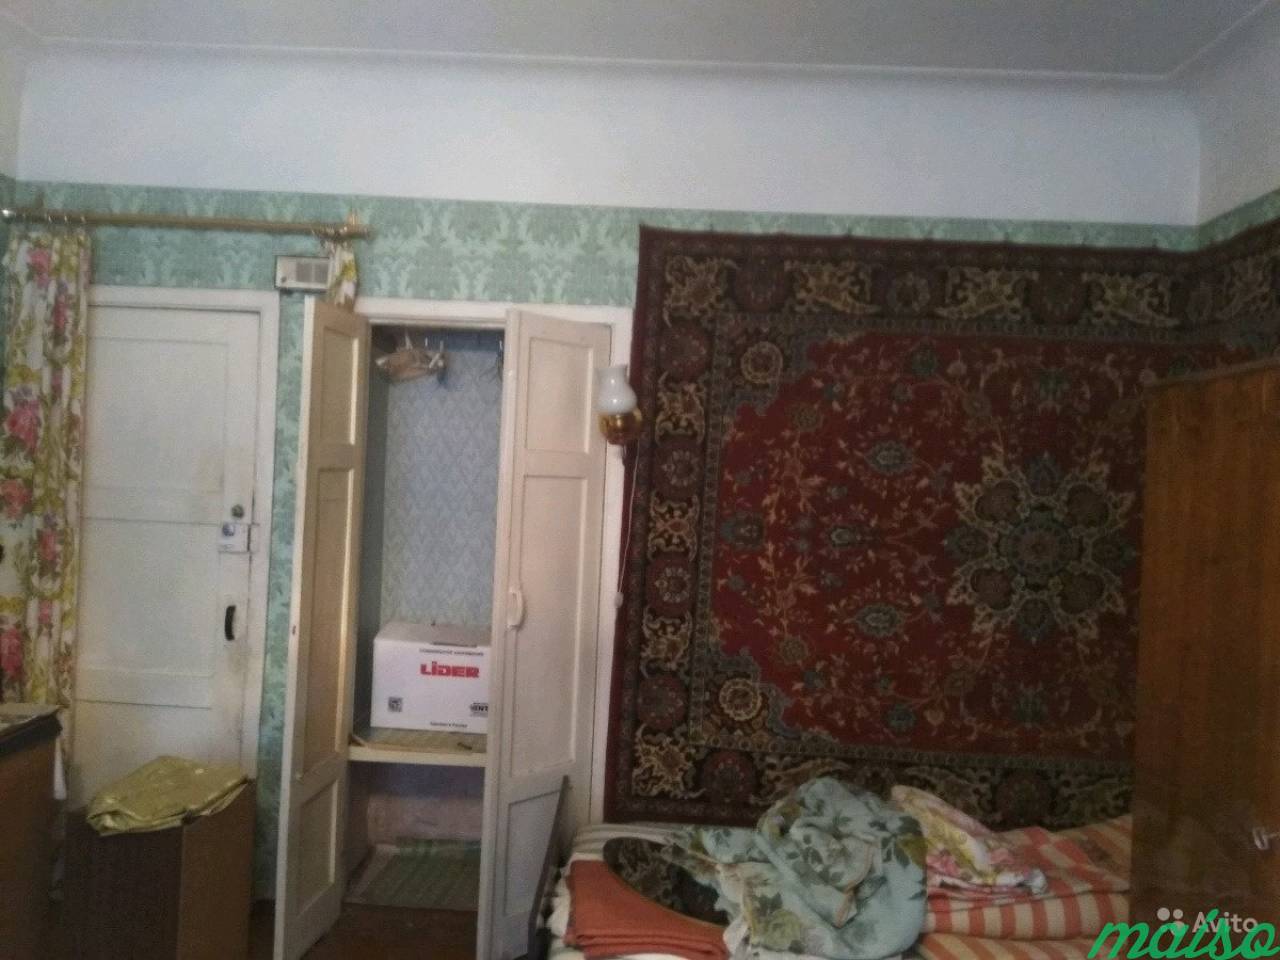 Комната 23 м² в 3-к, 3/5 эт. в Санкт-Петербурге. Фото 3